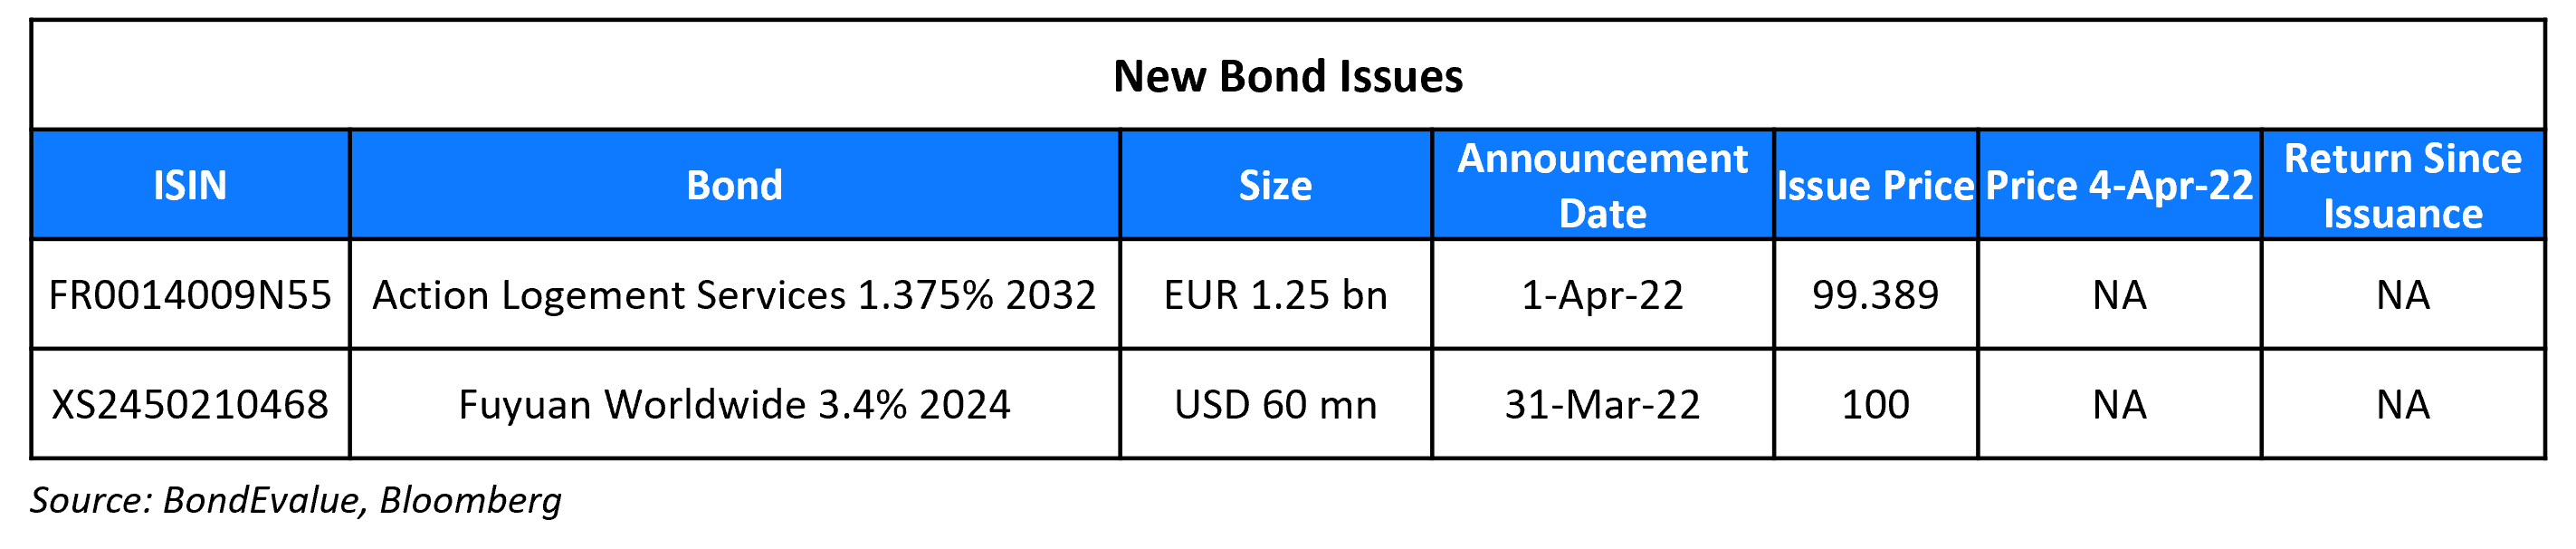 New Bond Issues 4 Apr